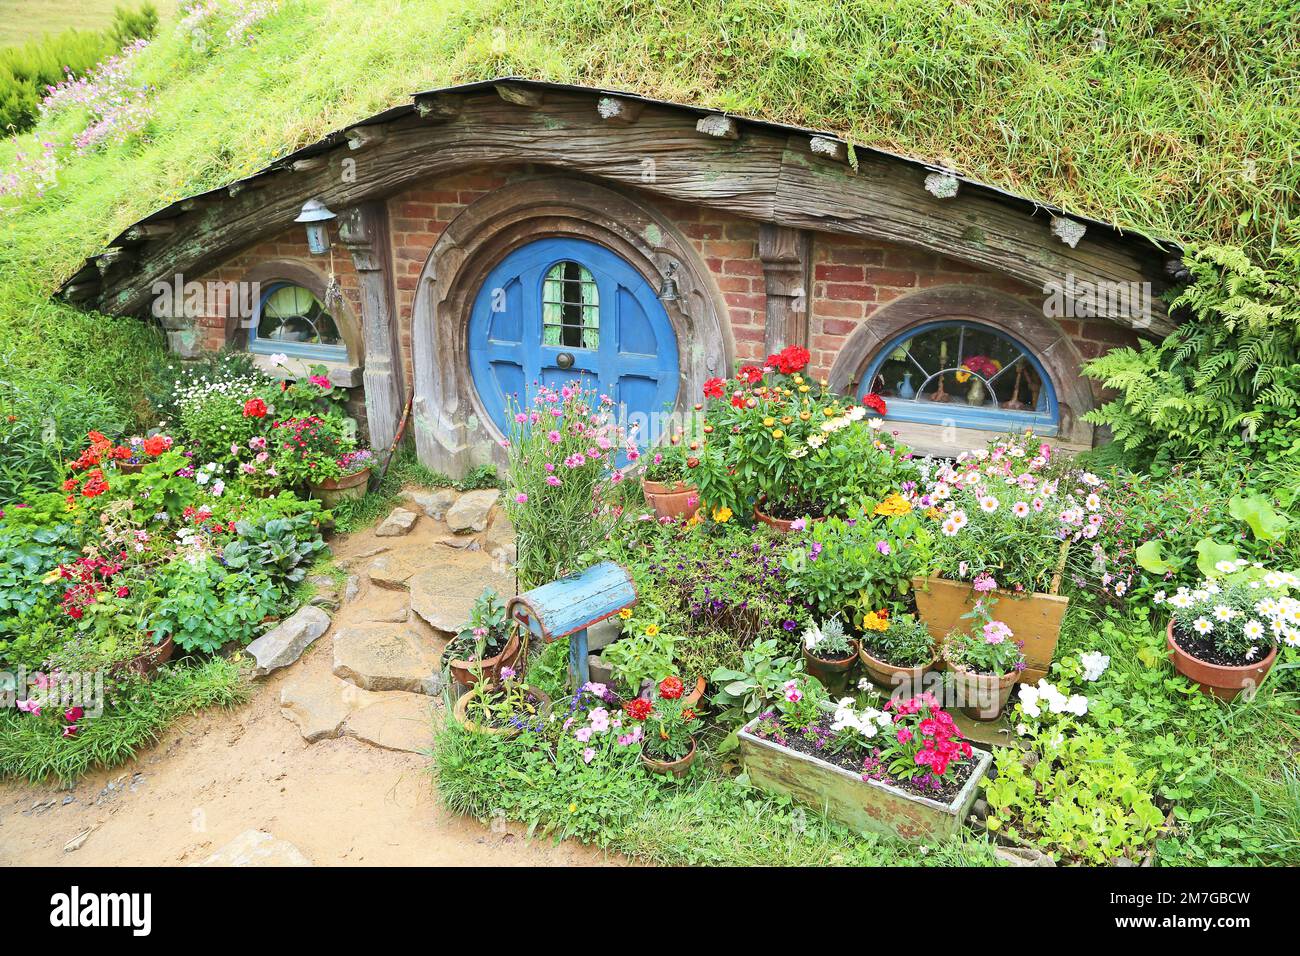 Hobbit house with blue door - Matamata, New Zealand Stock Photo